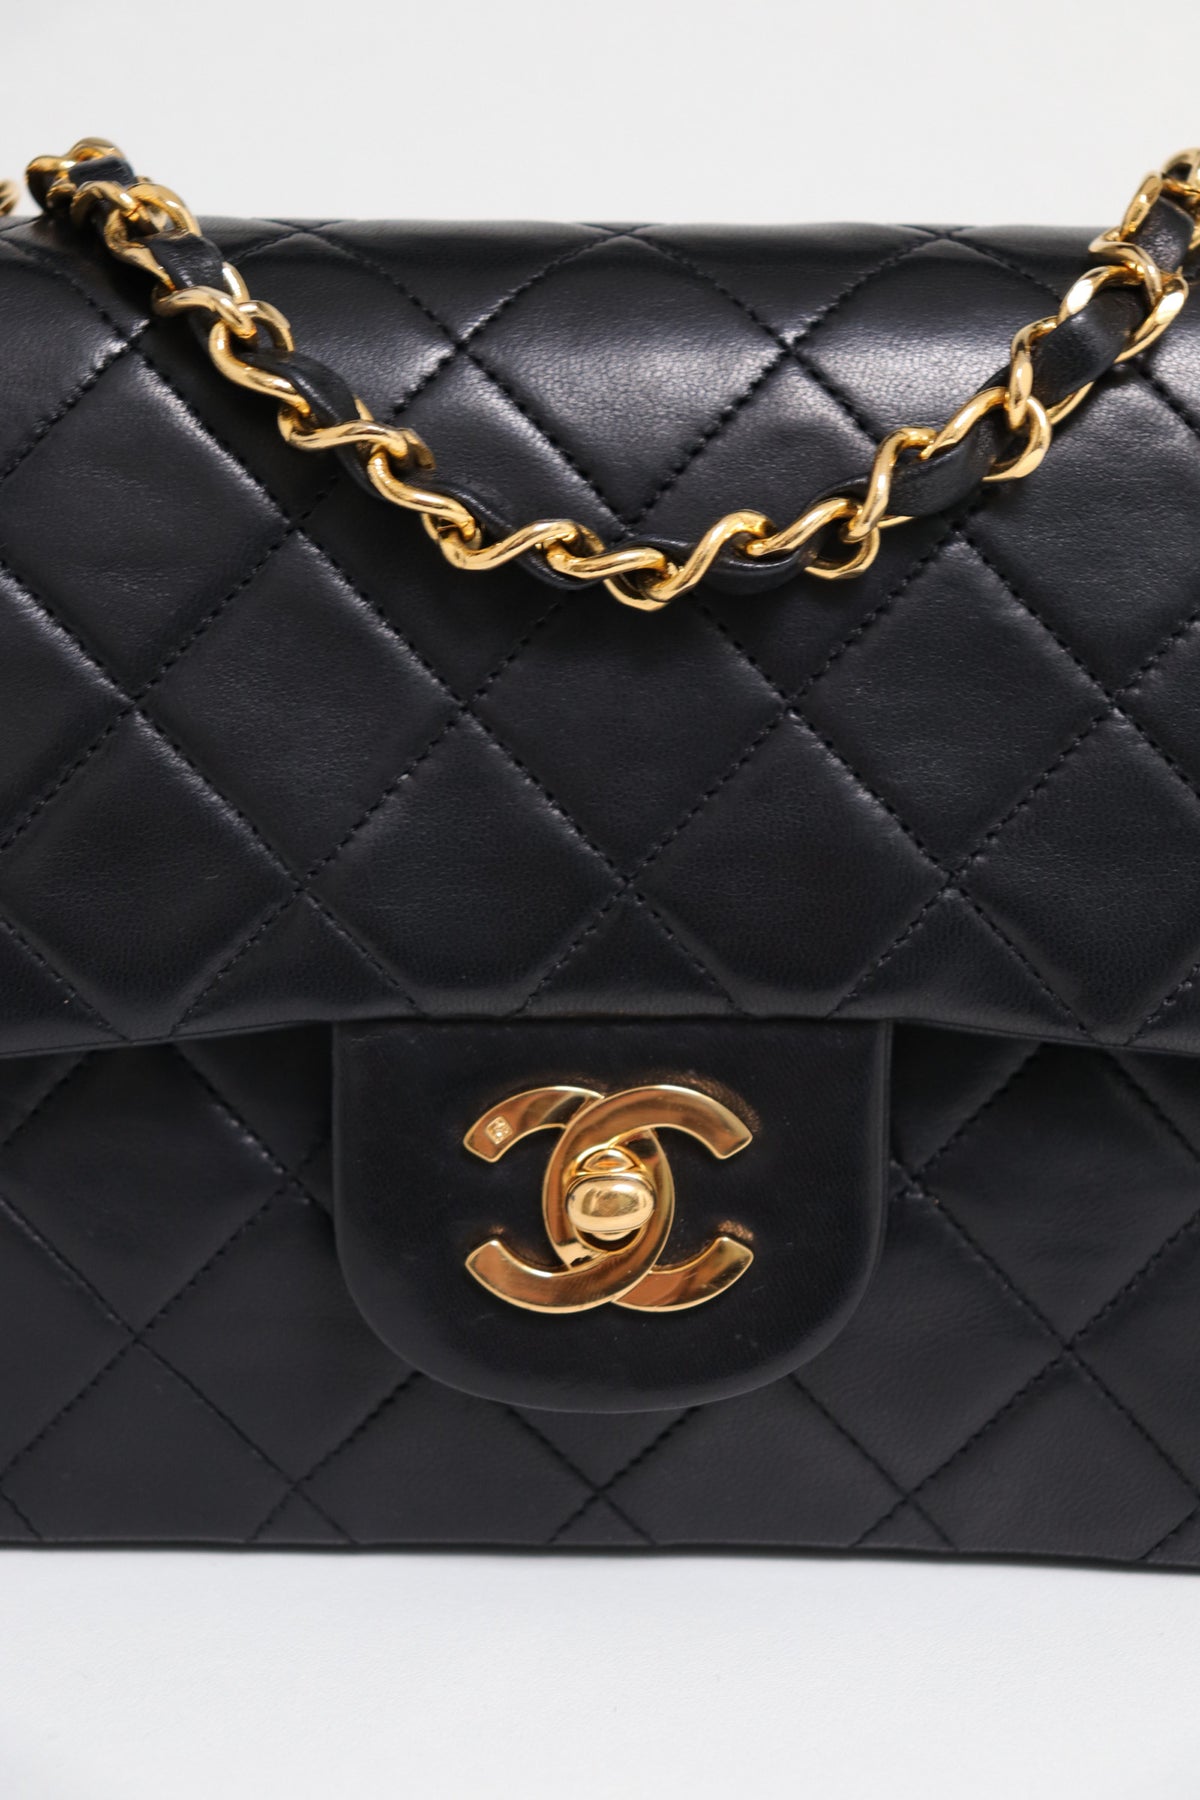 Ariadna Gutiérrez Closet Sale: Chanel Classic Mini Rectangular, Tricolor  with Silver Hardware, Preowned in Dustbag MA004A